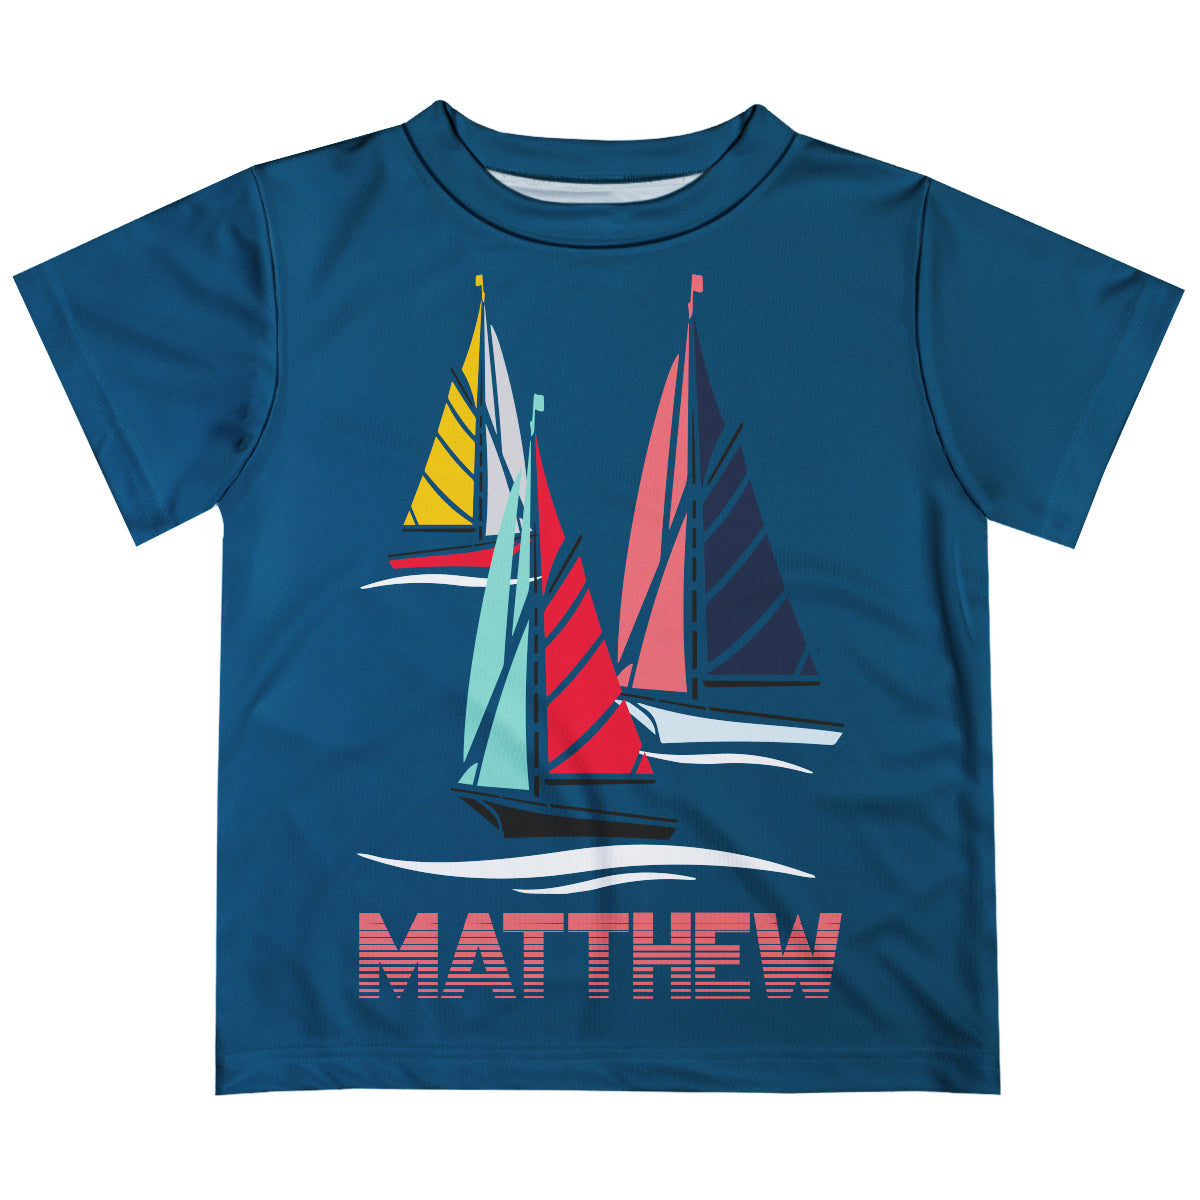 Sailboats Name Blue Short Sleeve Tee Shirt